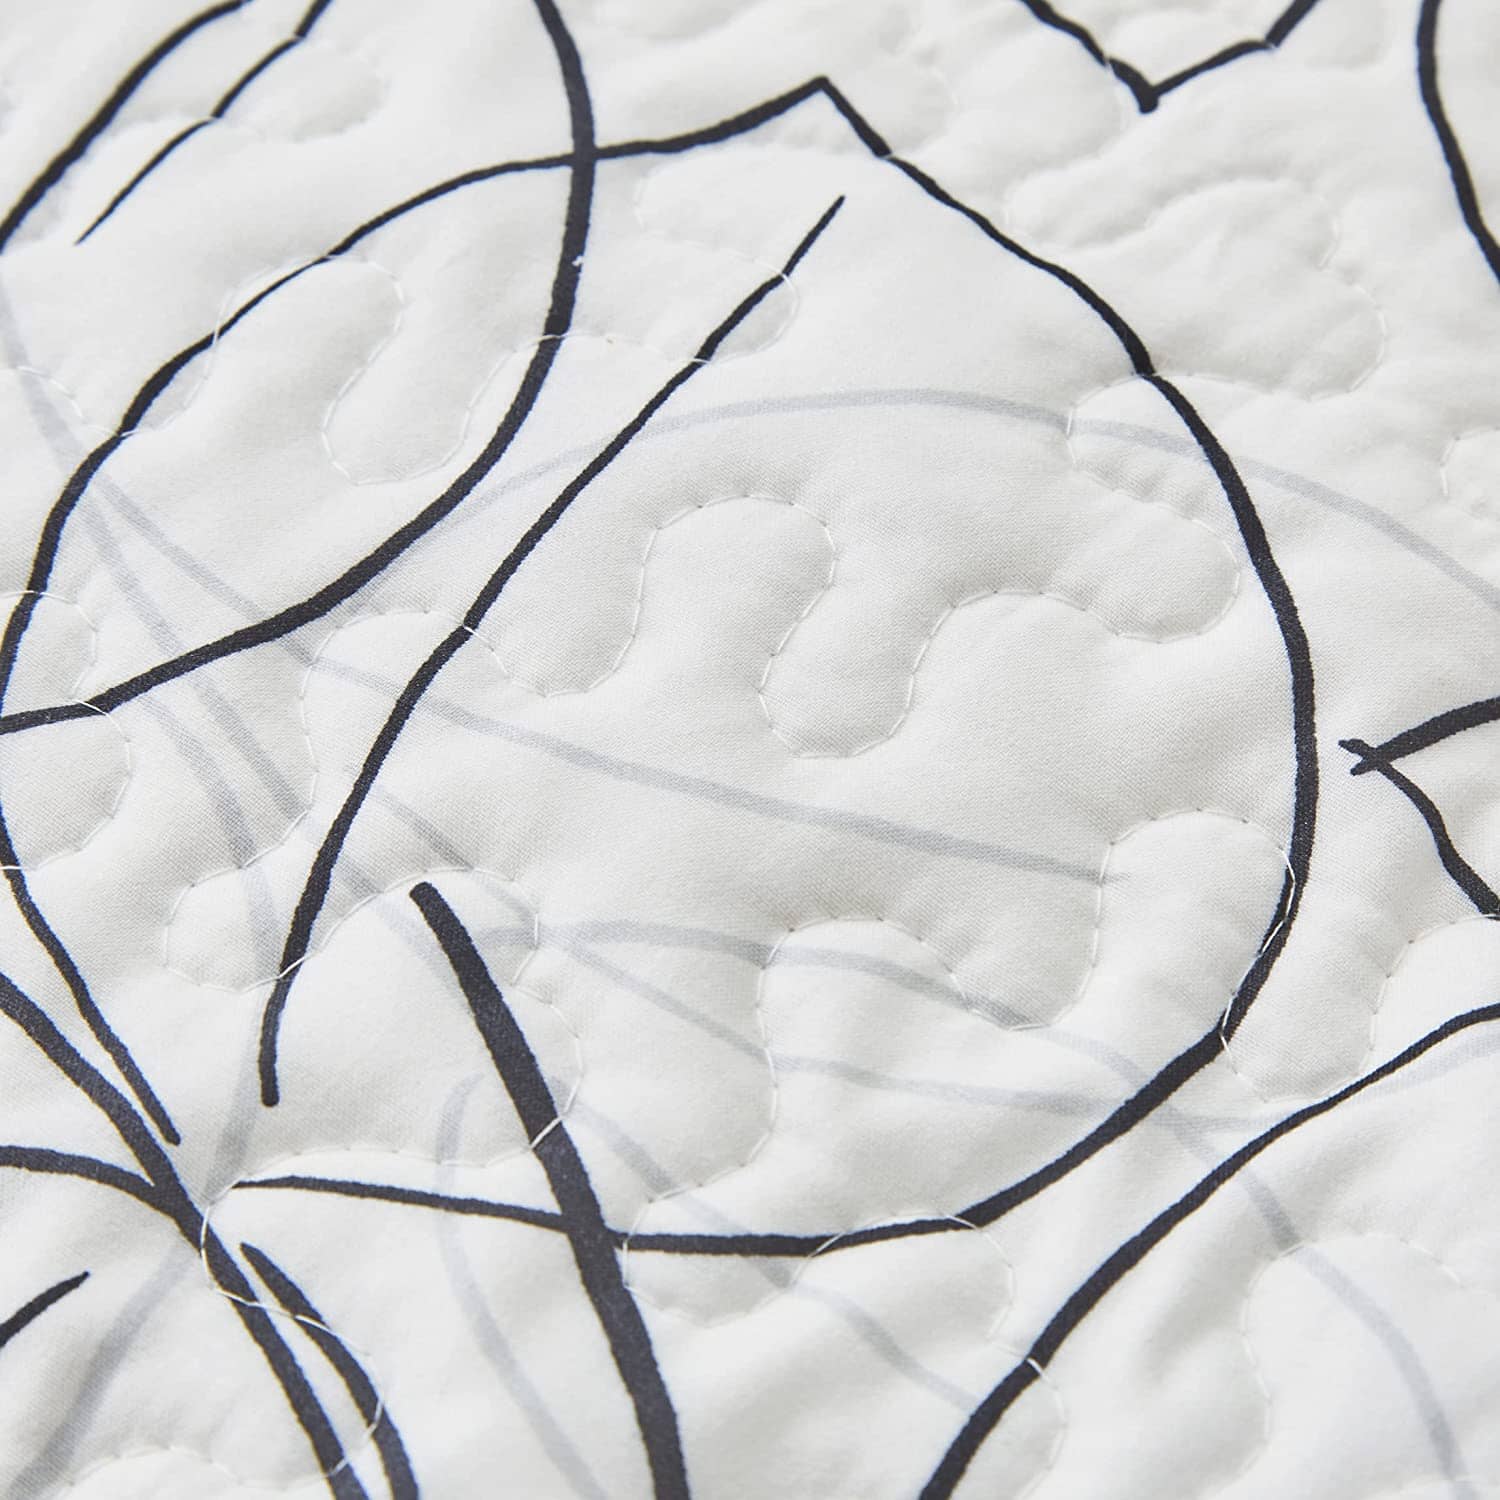 Tache Modern Abstract Leaf Line Art Foliage White Grey Black Gold Pillow Shams (TJ3571) - Tache Home Fashion